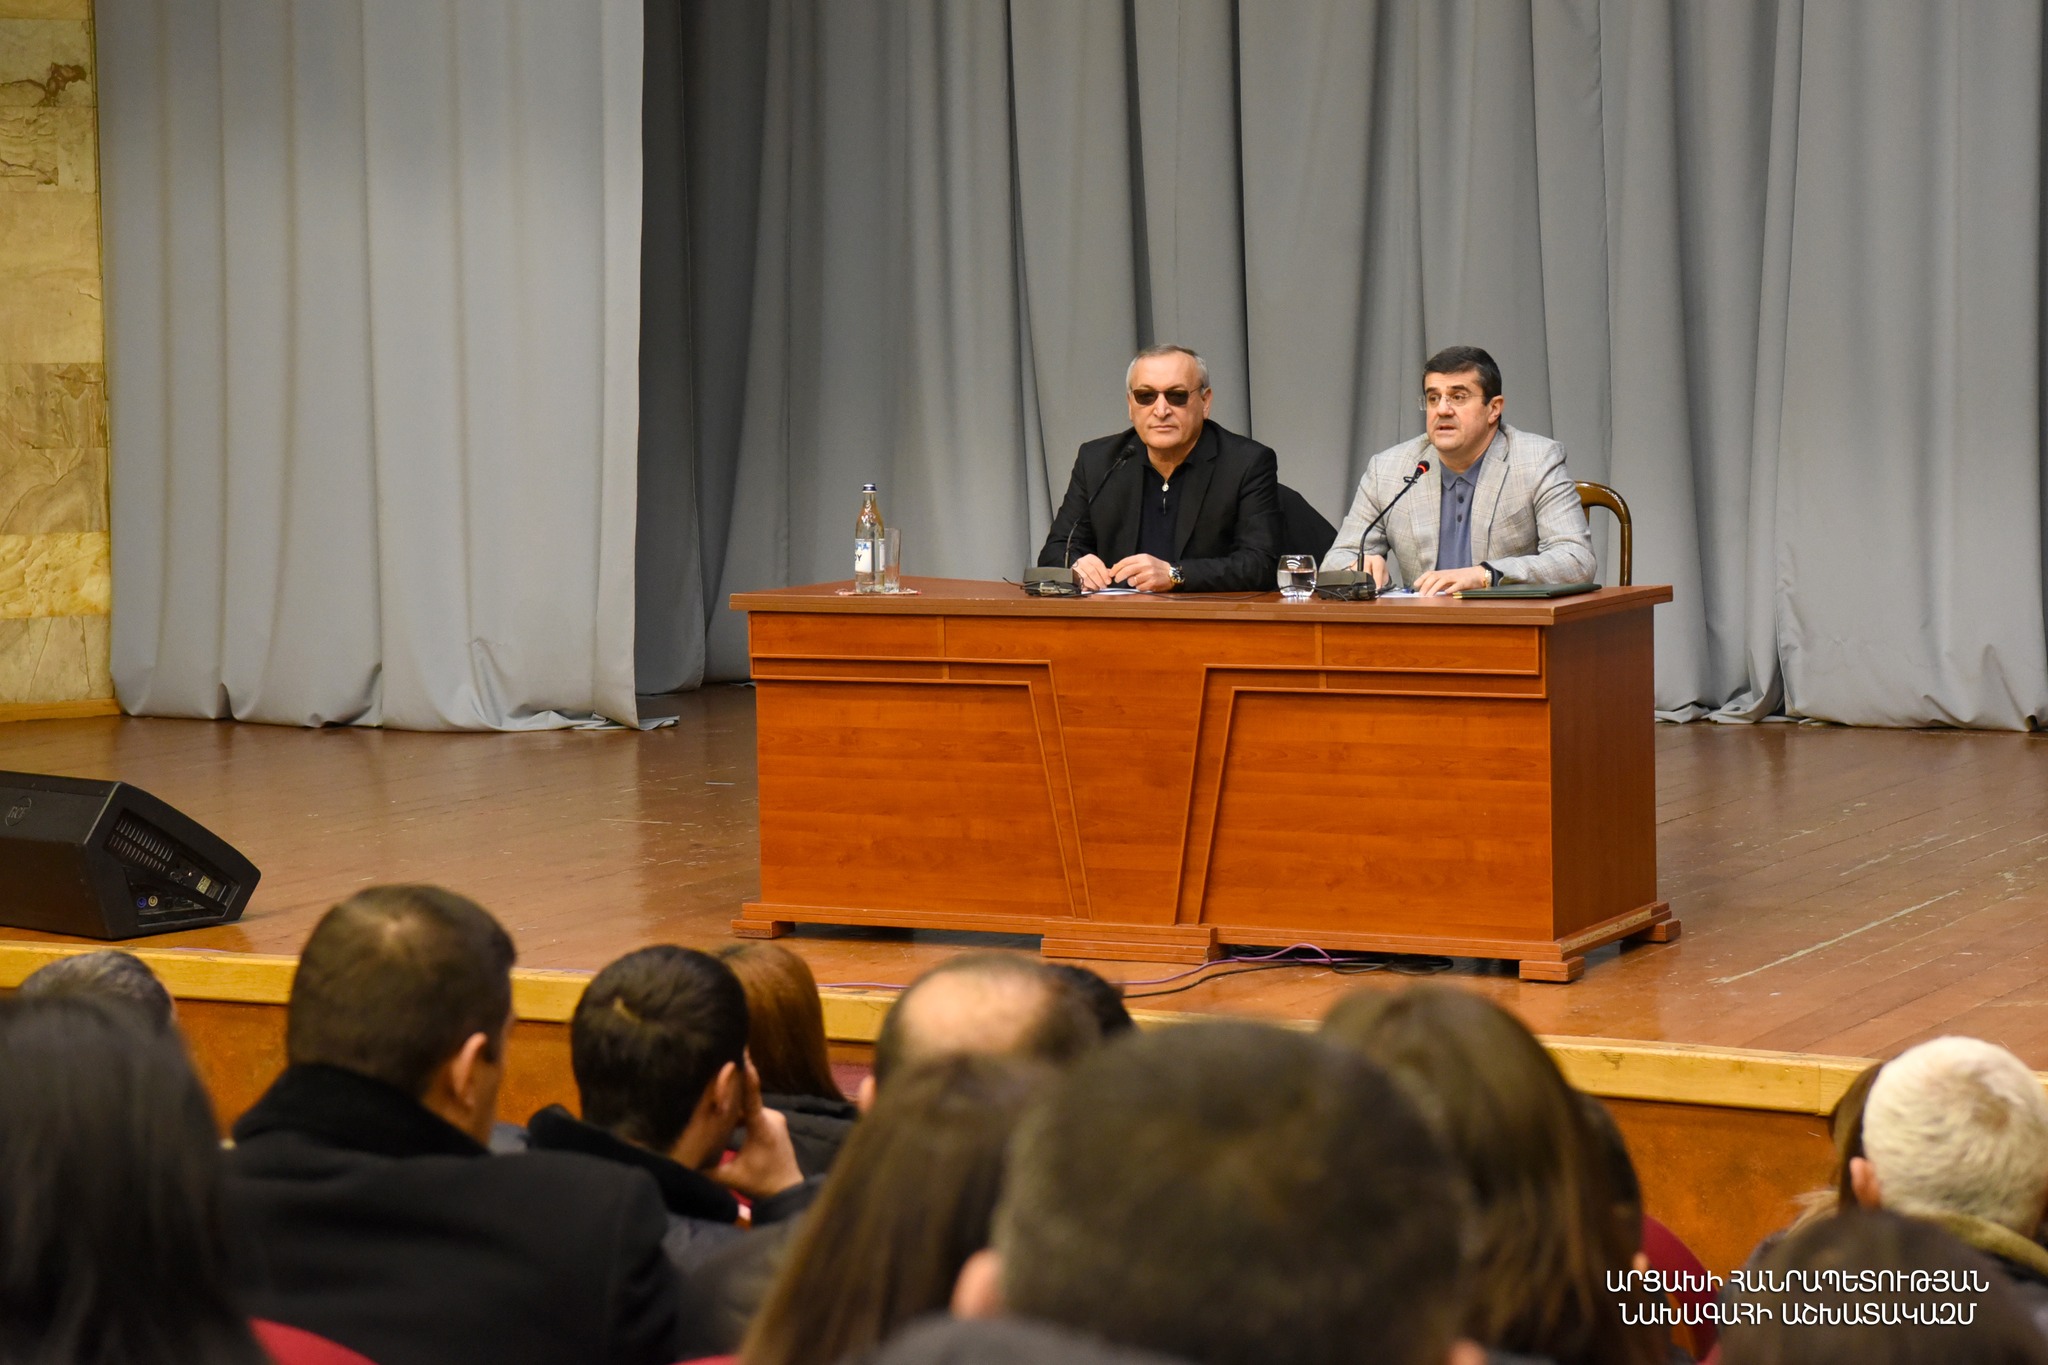 “Submit your resignation, Mr. President.” Speaker of the Artsakh Parliament to Arayik Harutyunyan